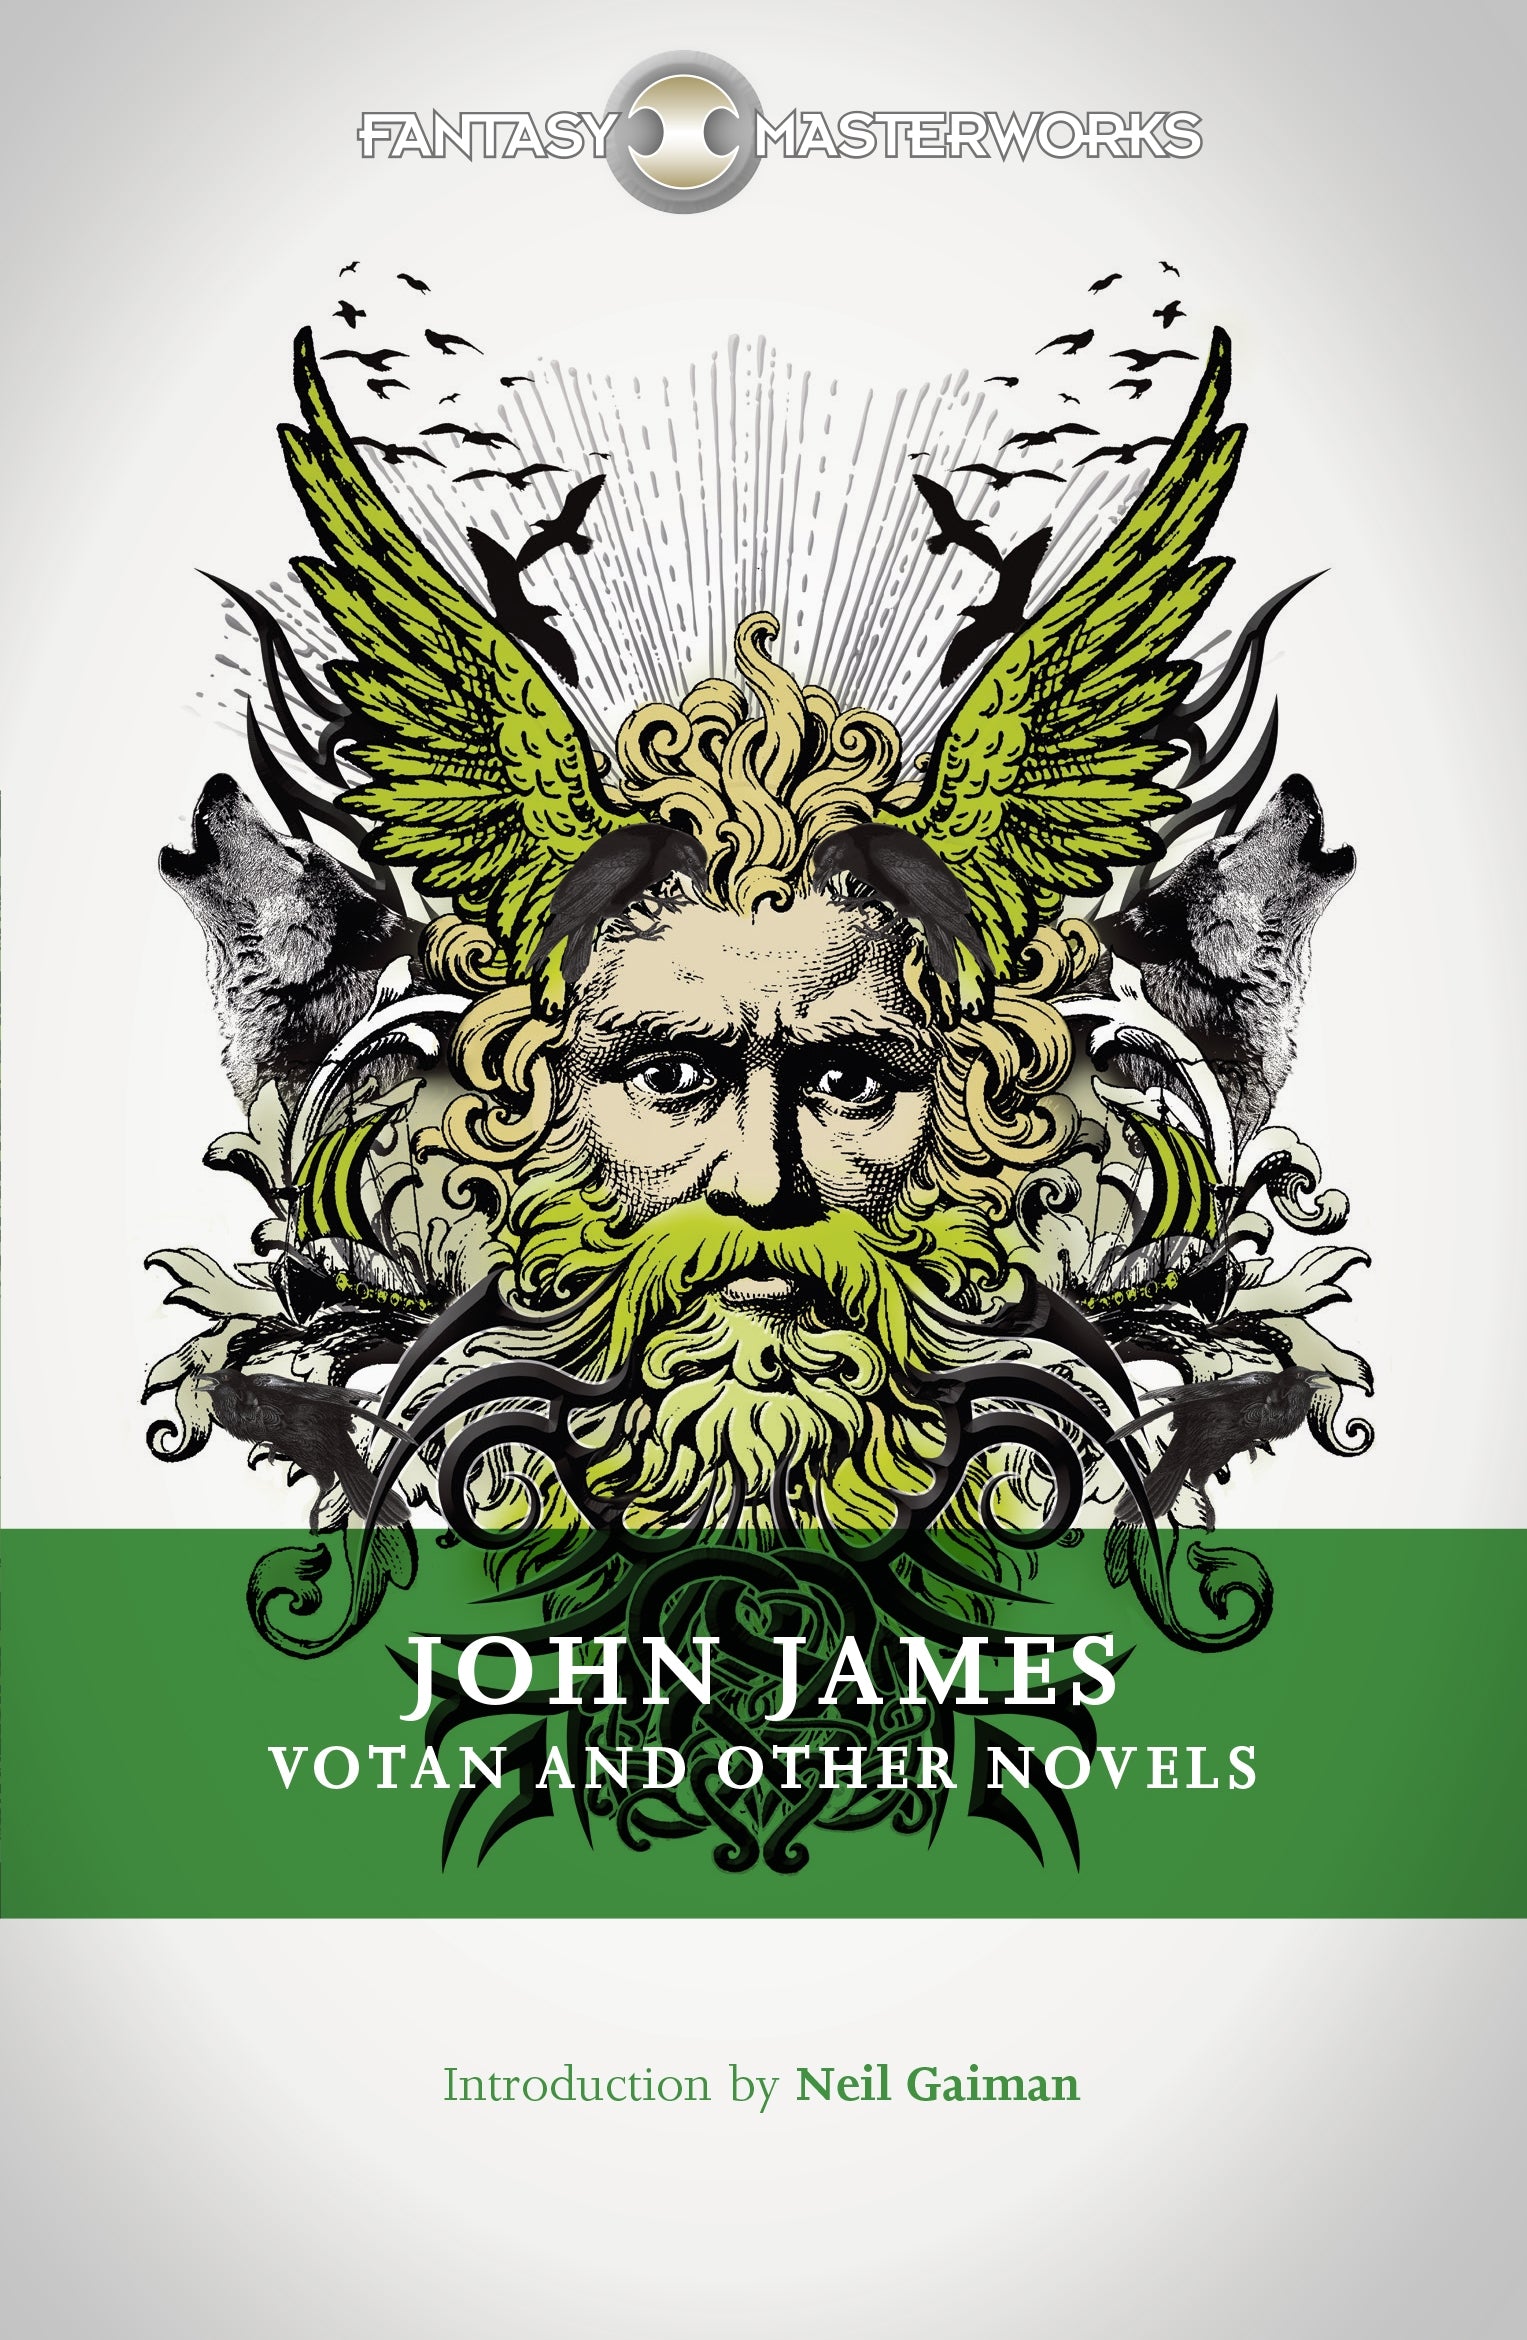 Votan and Other Novels by John James